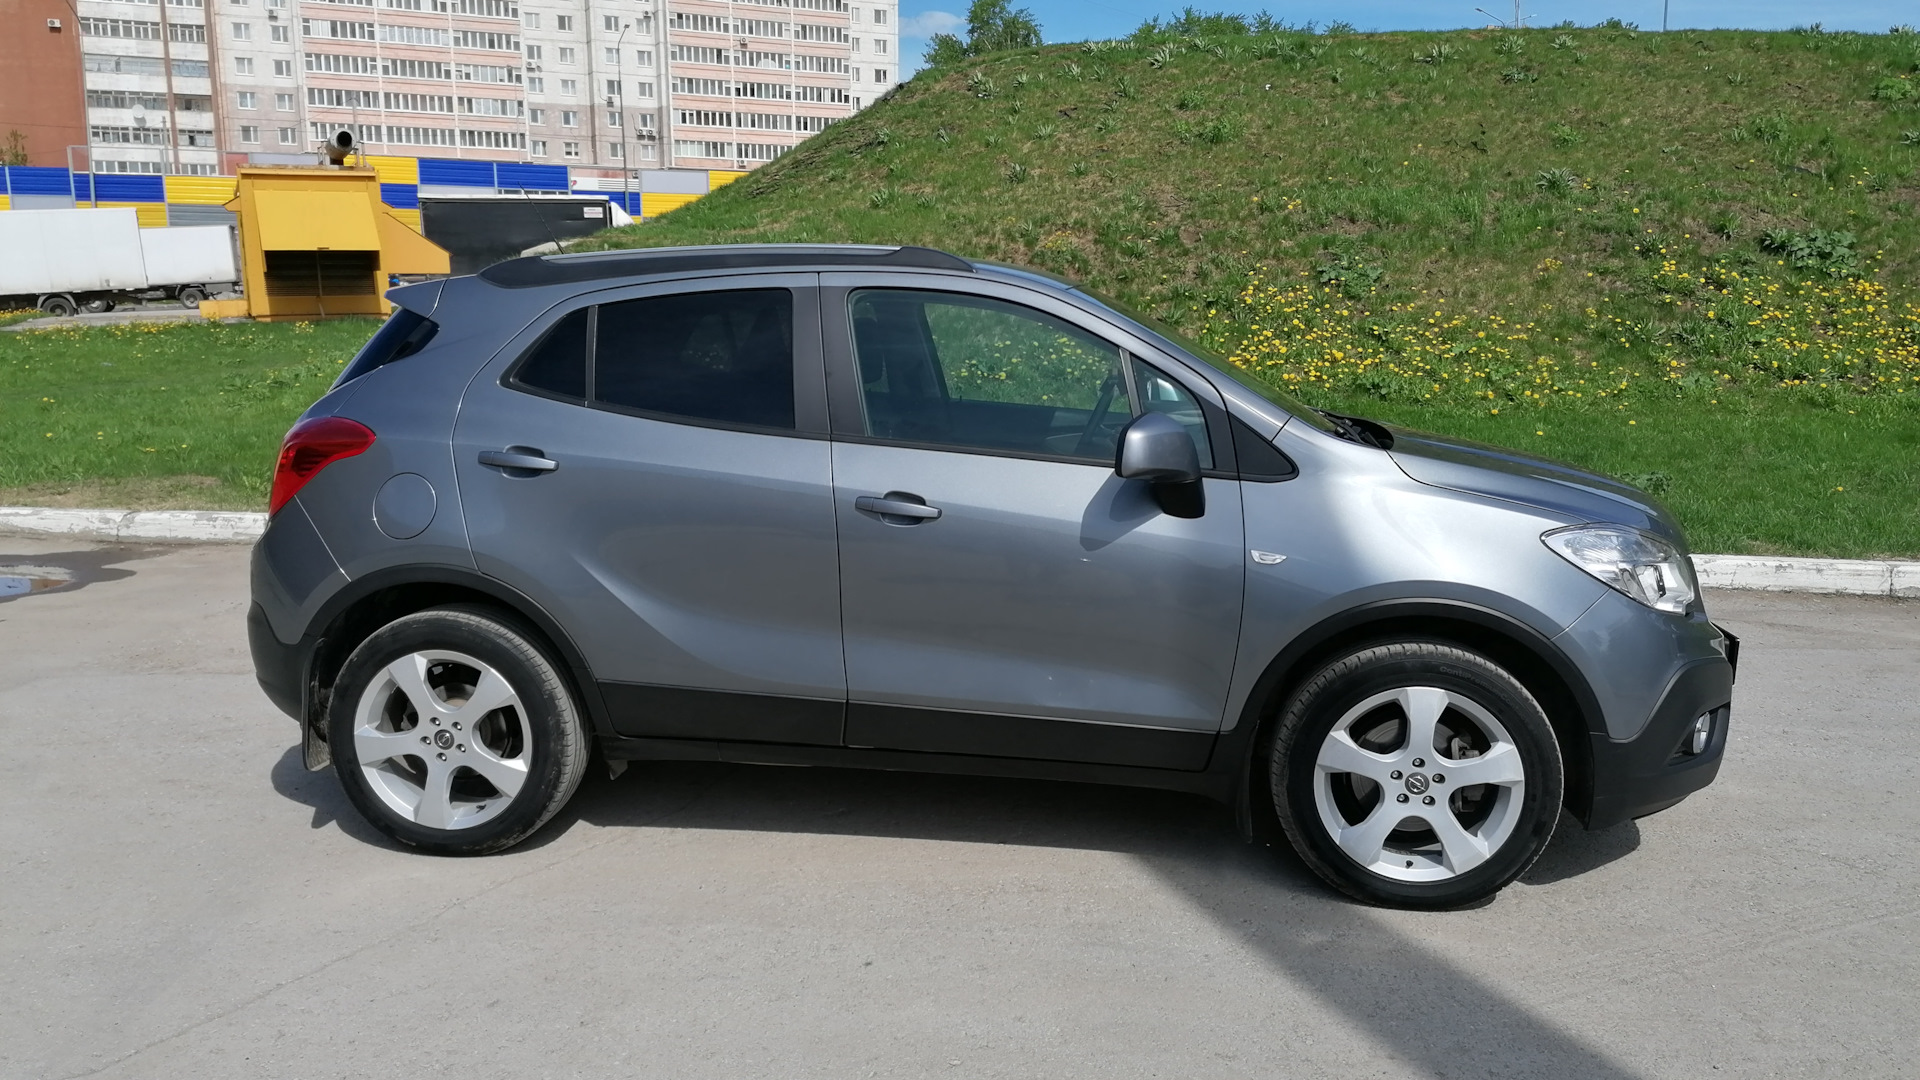 Opel Mokka серый. Opel Mokka 1.8 МТ вес. Opel Mokka 2012 — 2016 i серебристый хетчбэк. Opel Mokka 2012 — 2016 i белый.